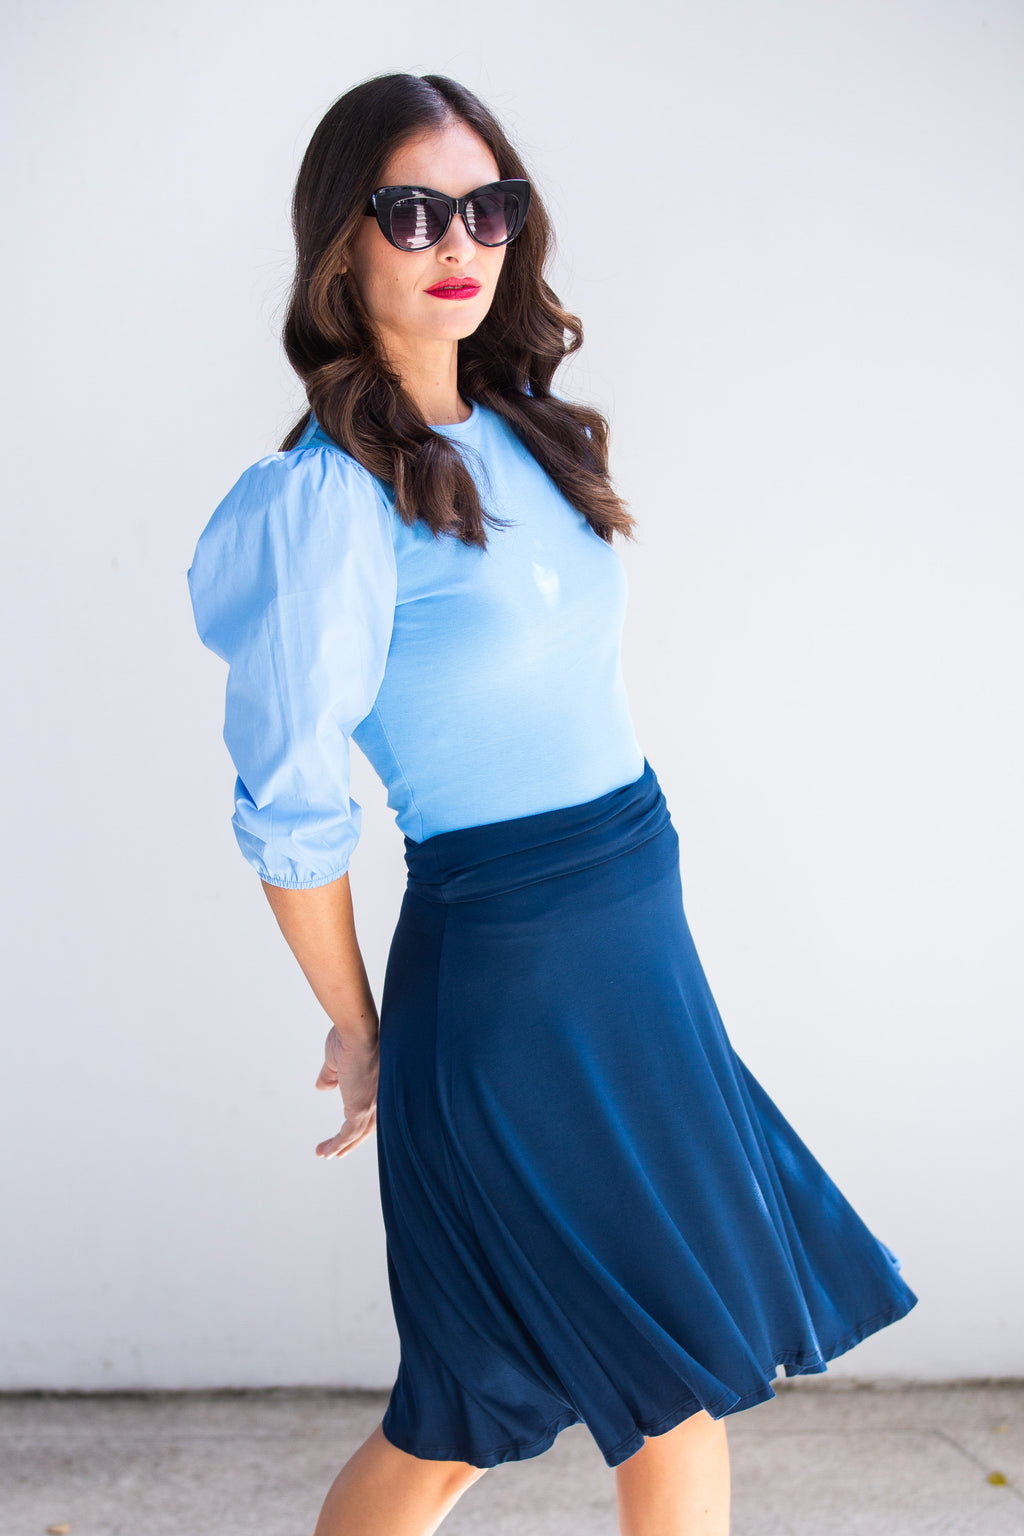 Daniella Faye WomenÕs Polyester Midi Skirt with Fold Over Waistband Style  DFMS Grey XS at Amazon Women's Clothing store